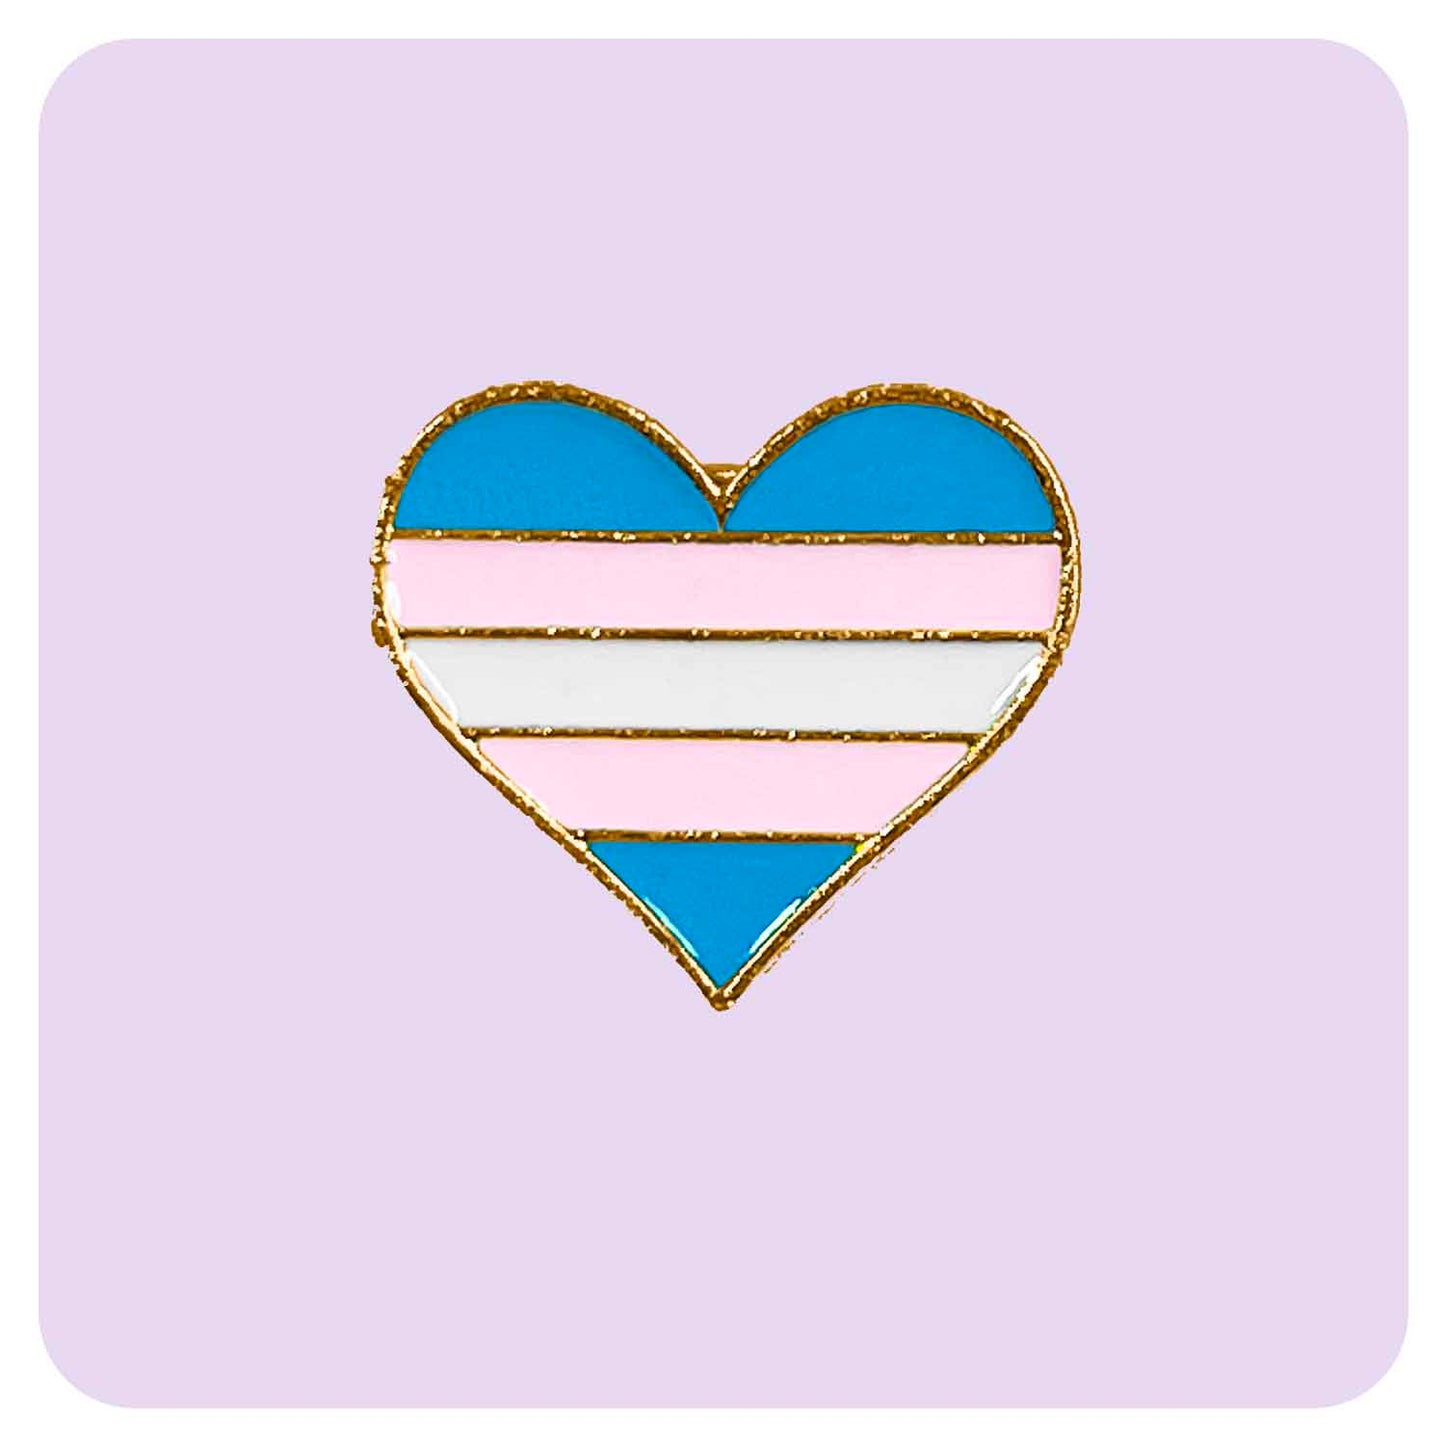 Pride Trans Heart Enamel Pin